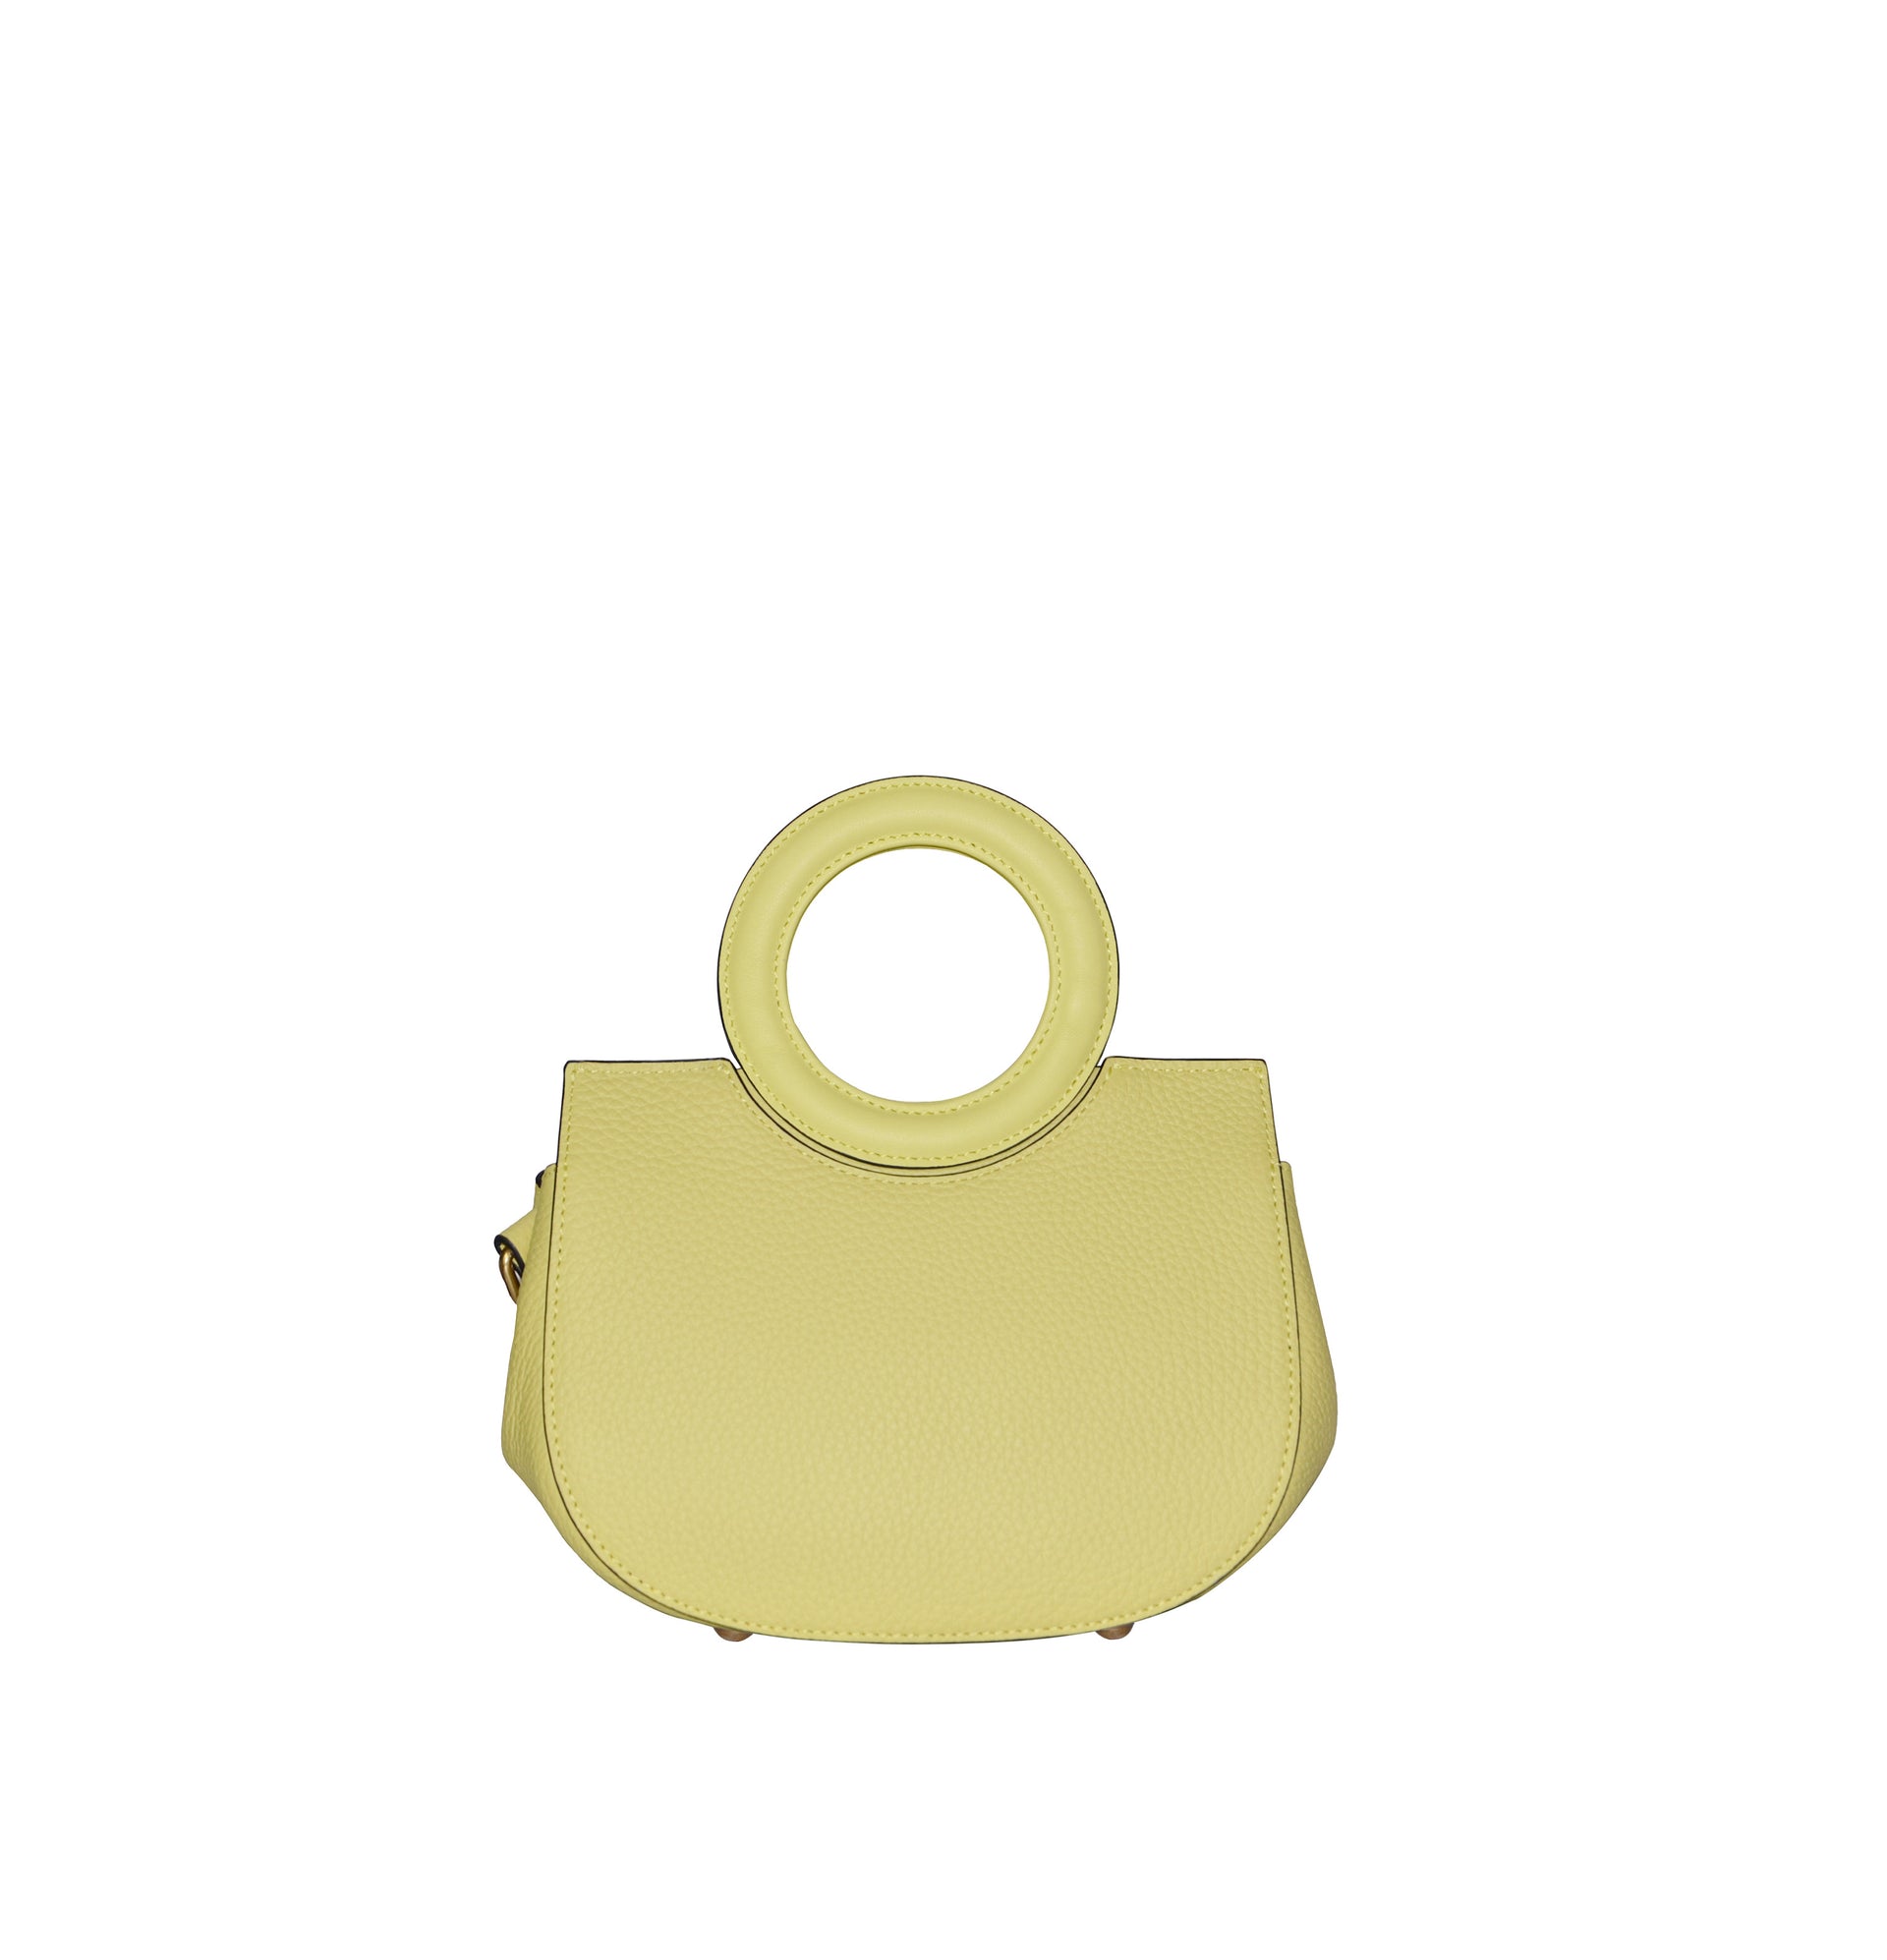 Pin on Luxury Bag